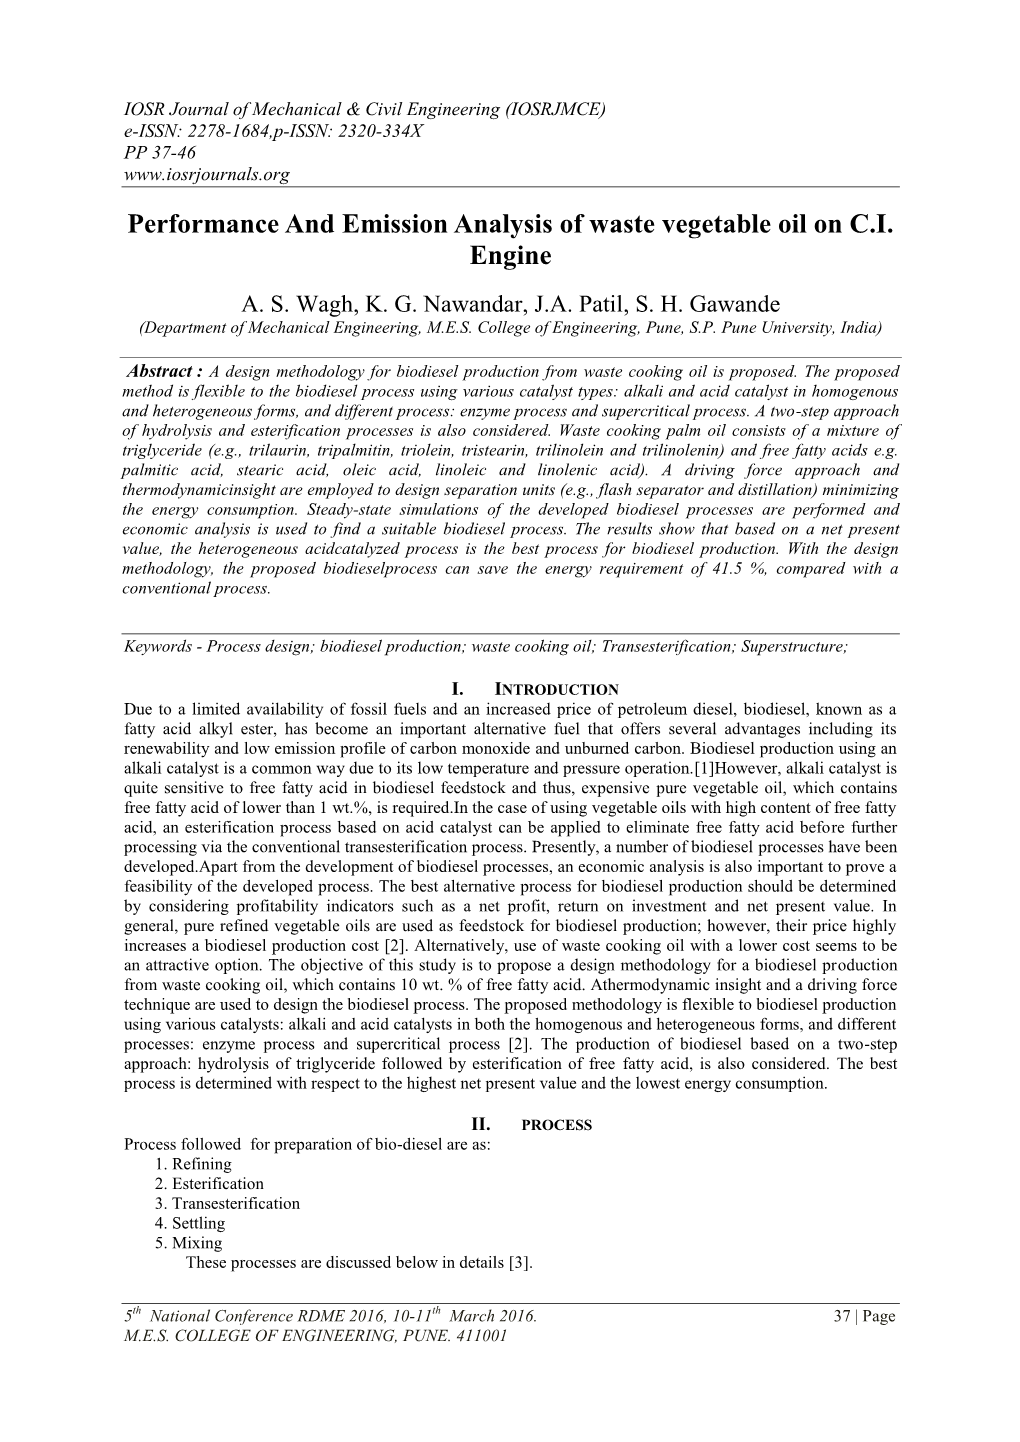 Performance and Emission Analysis of Waste Vegetable Oil on C.I. Engine